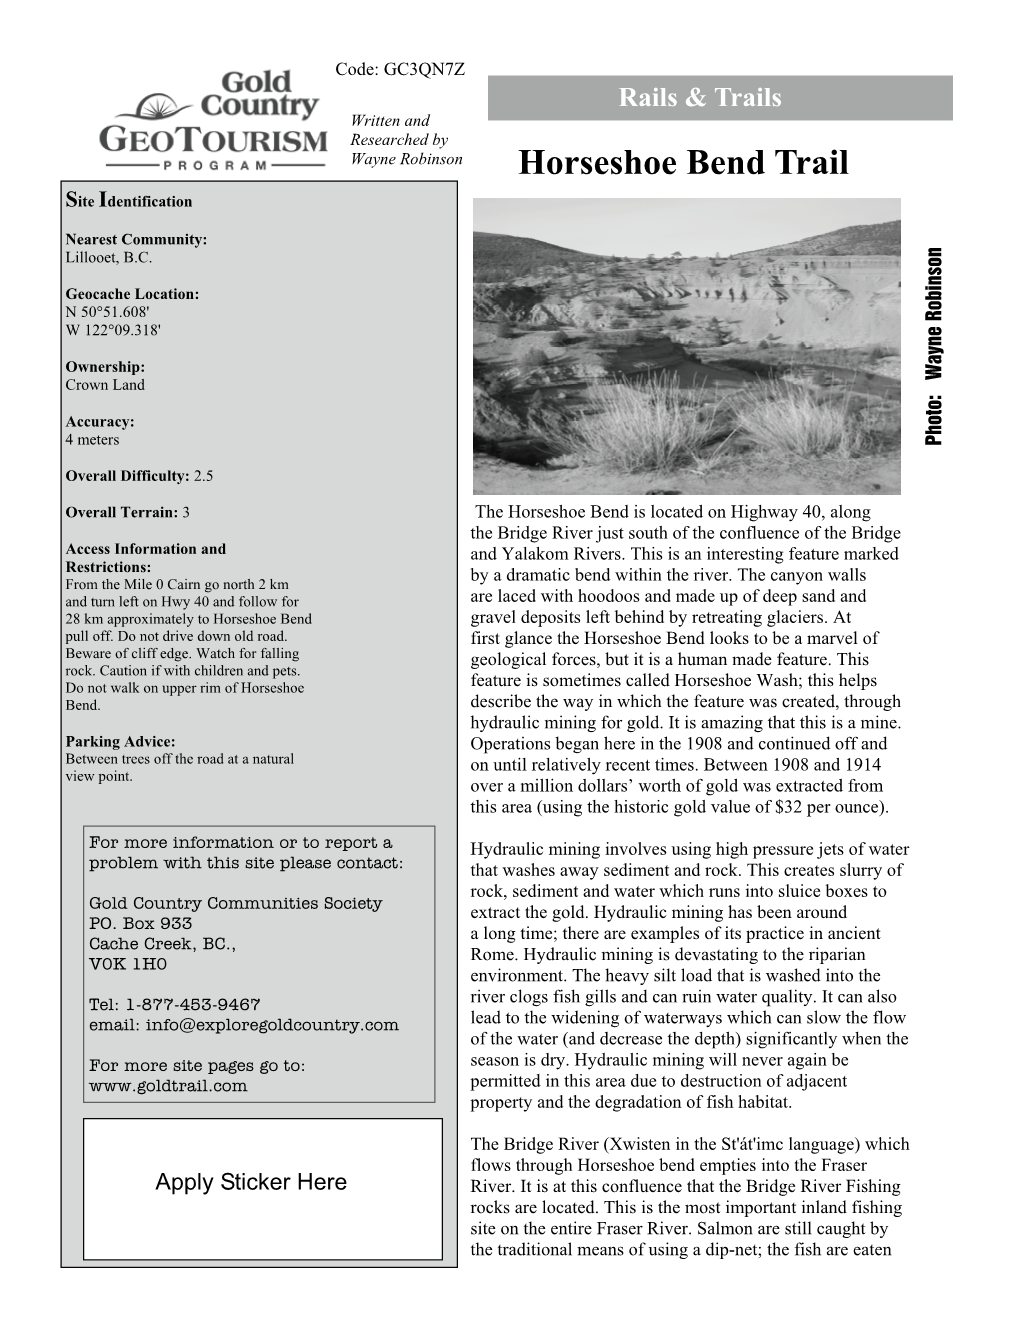 Horseshoe Bend Trail Rails & Trails Made Upofdeepsandand Es